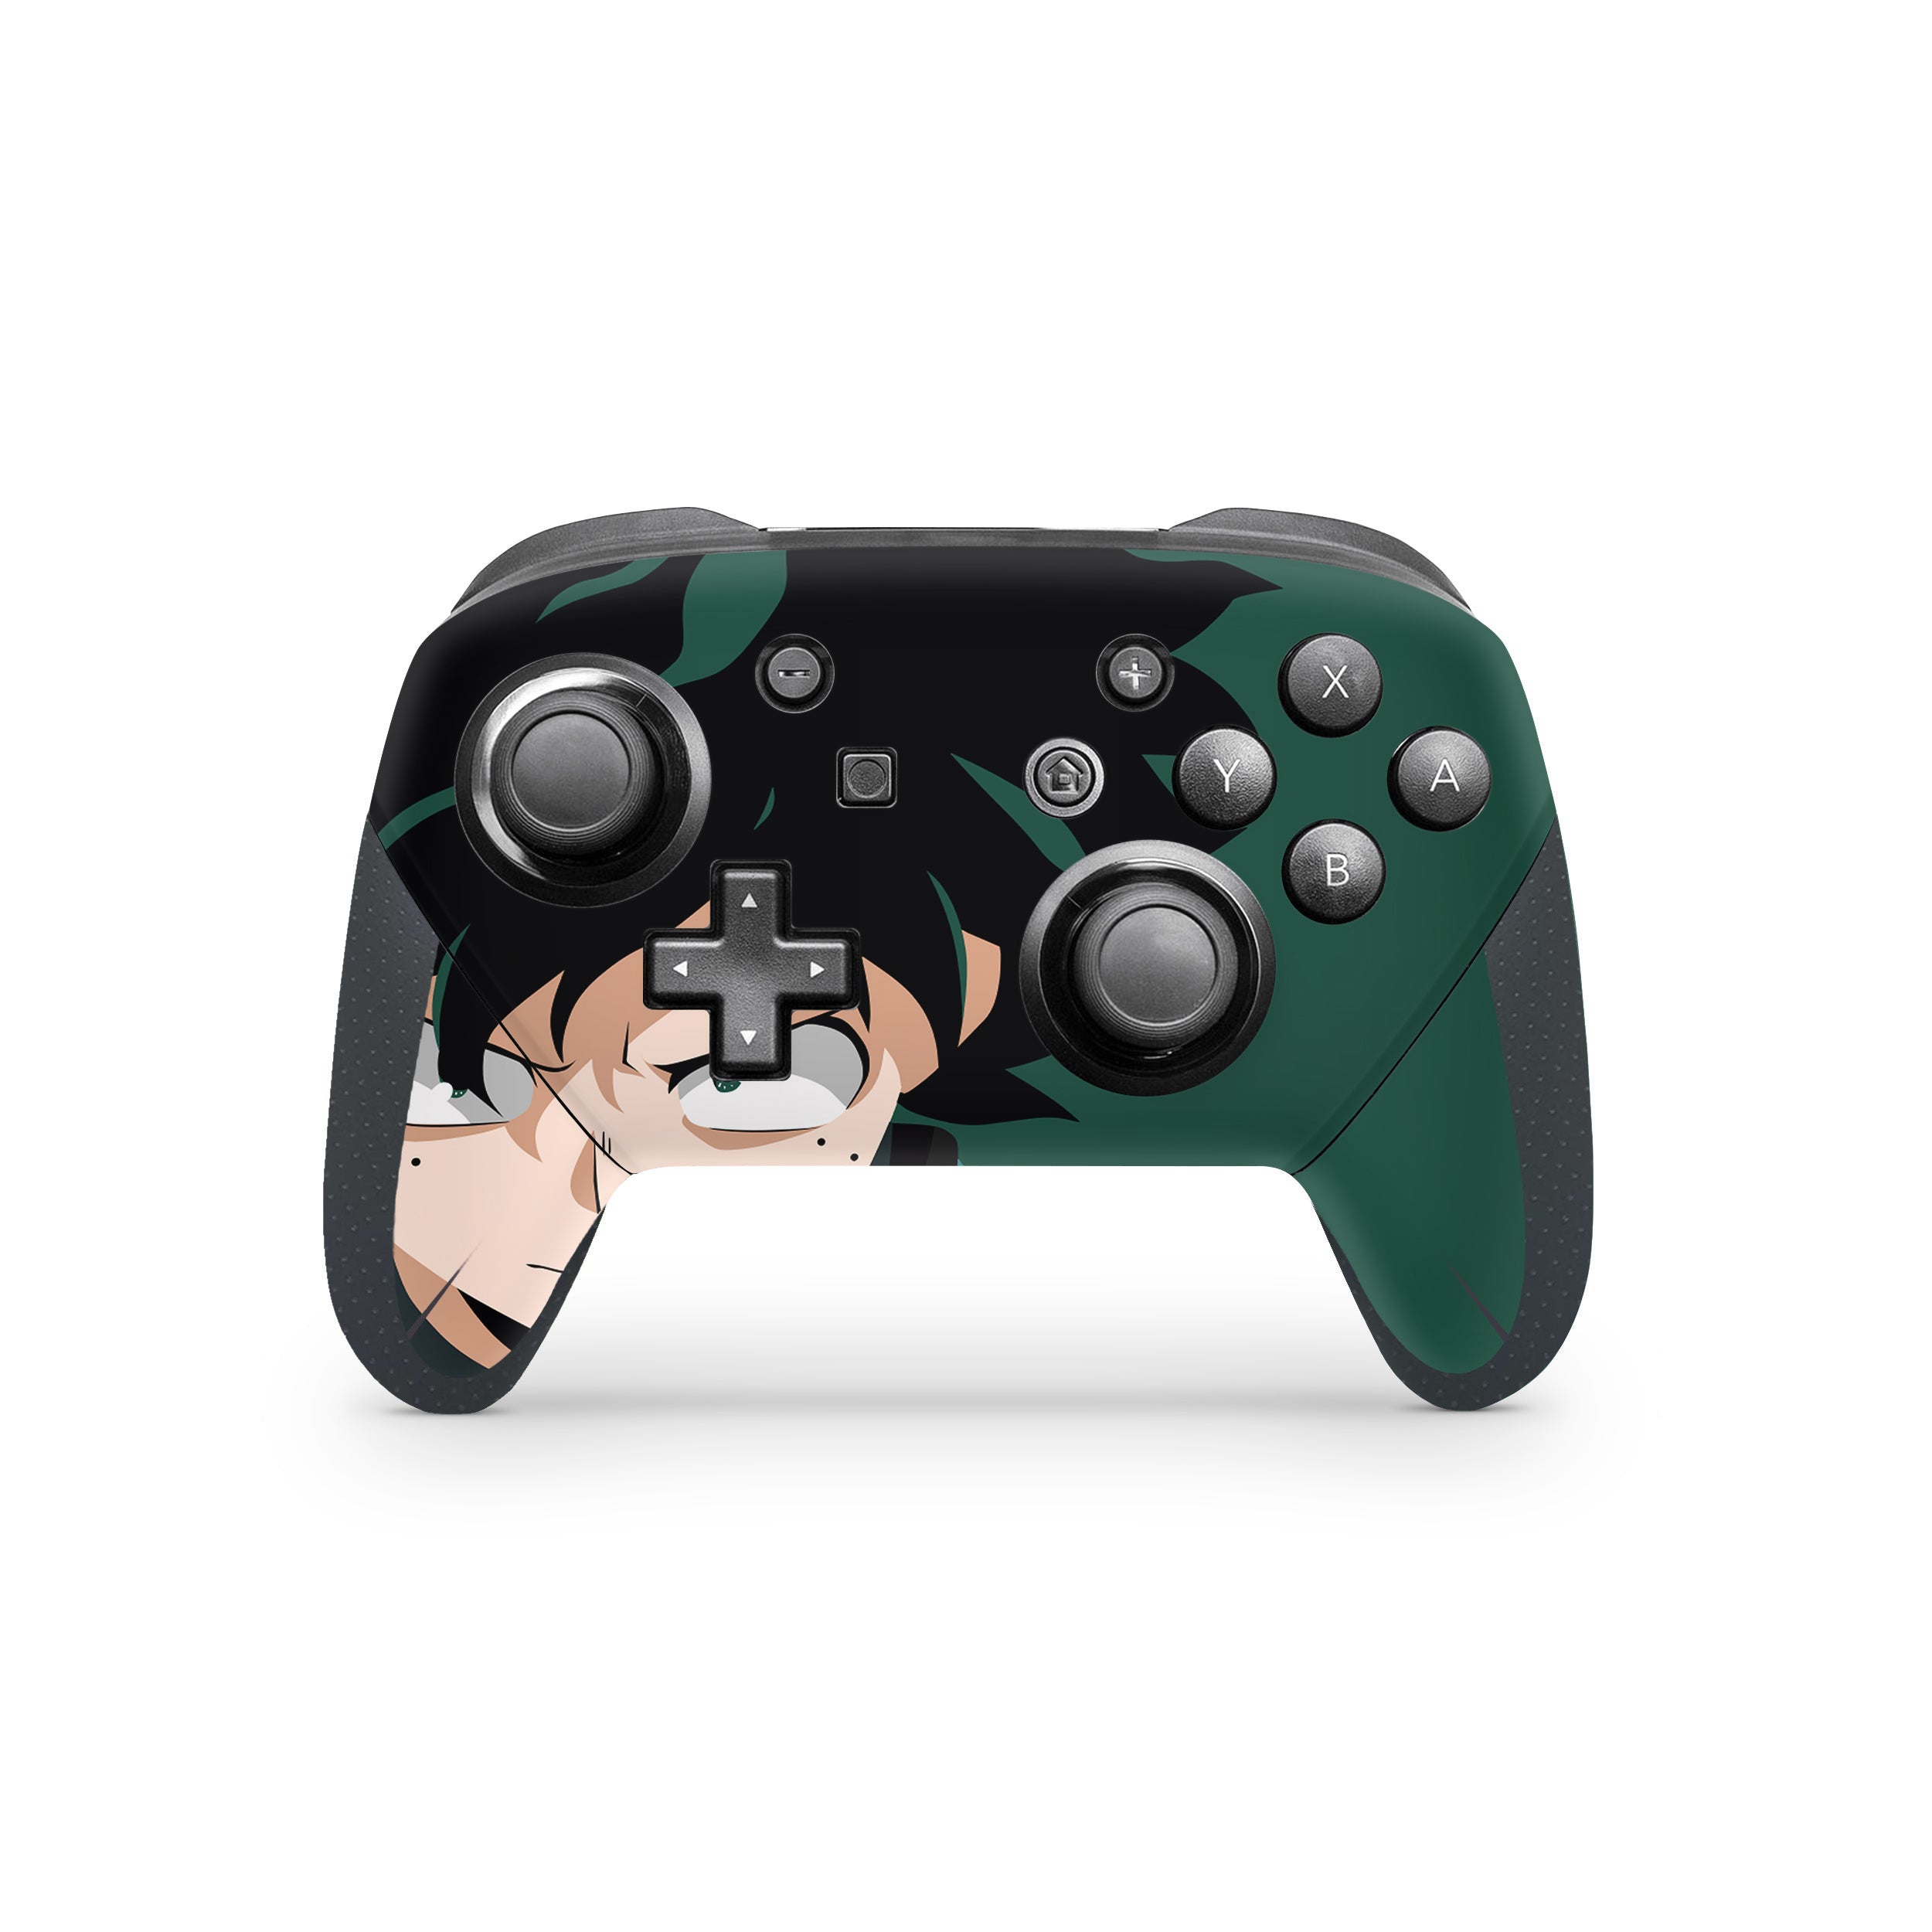 A video game skin featuring a My Hero Academia Izuku Midoriya design for the Switch Pro Controller.